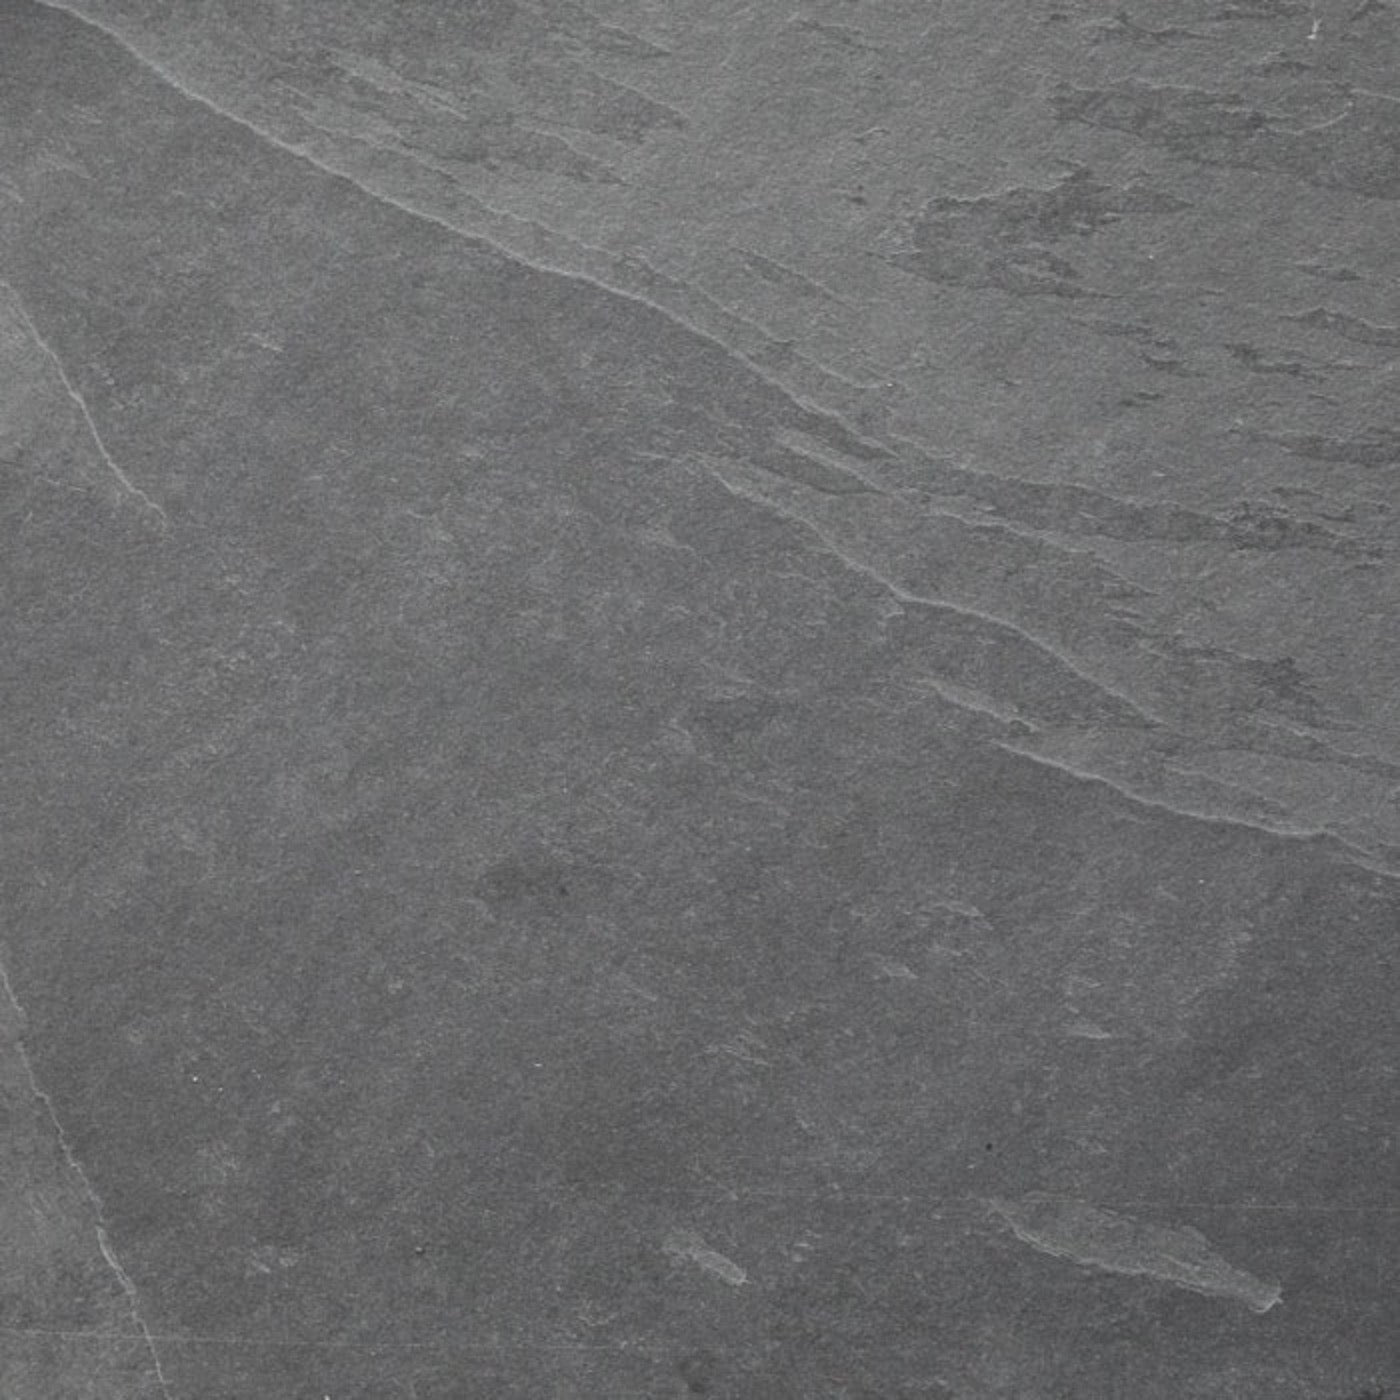 Black Slate Paving Slabs | 600 x 600 x 20 mm | £32.84/m2 - Crate Deal | NI